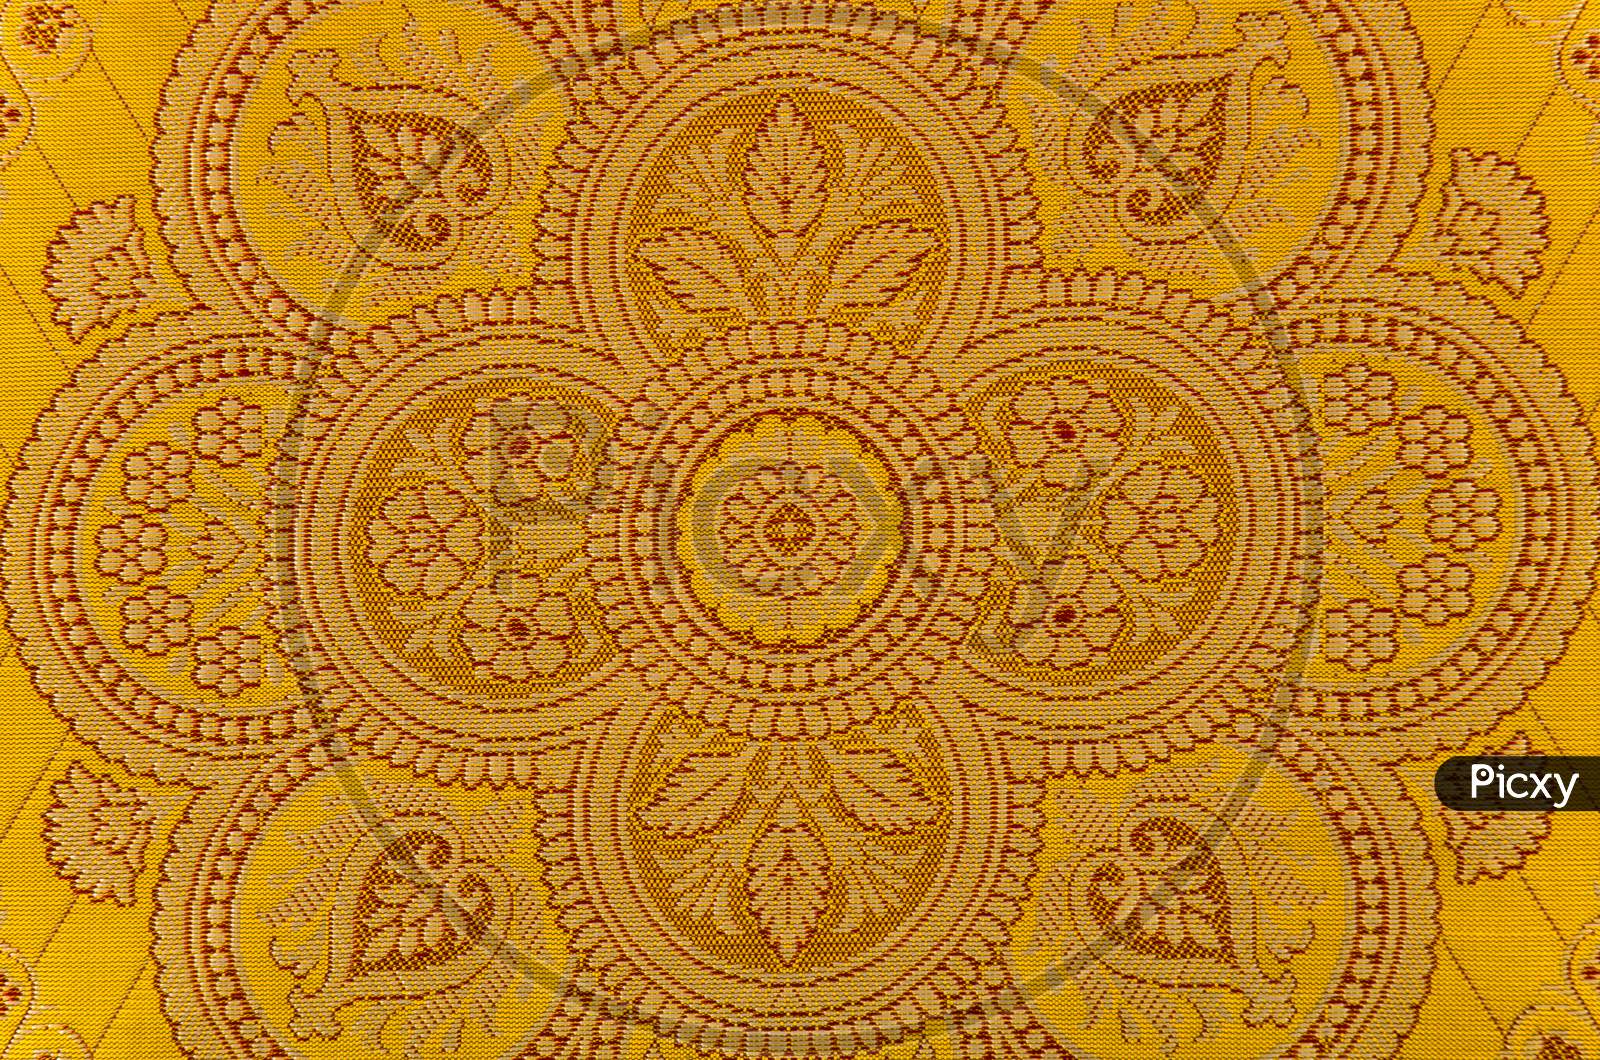 Oriental Ornamented Textile